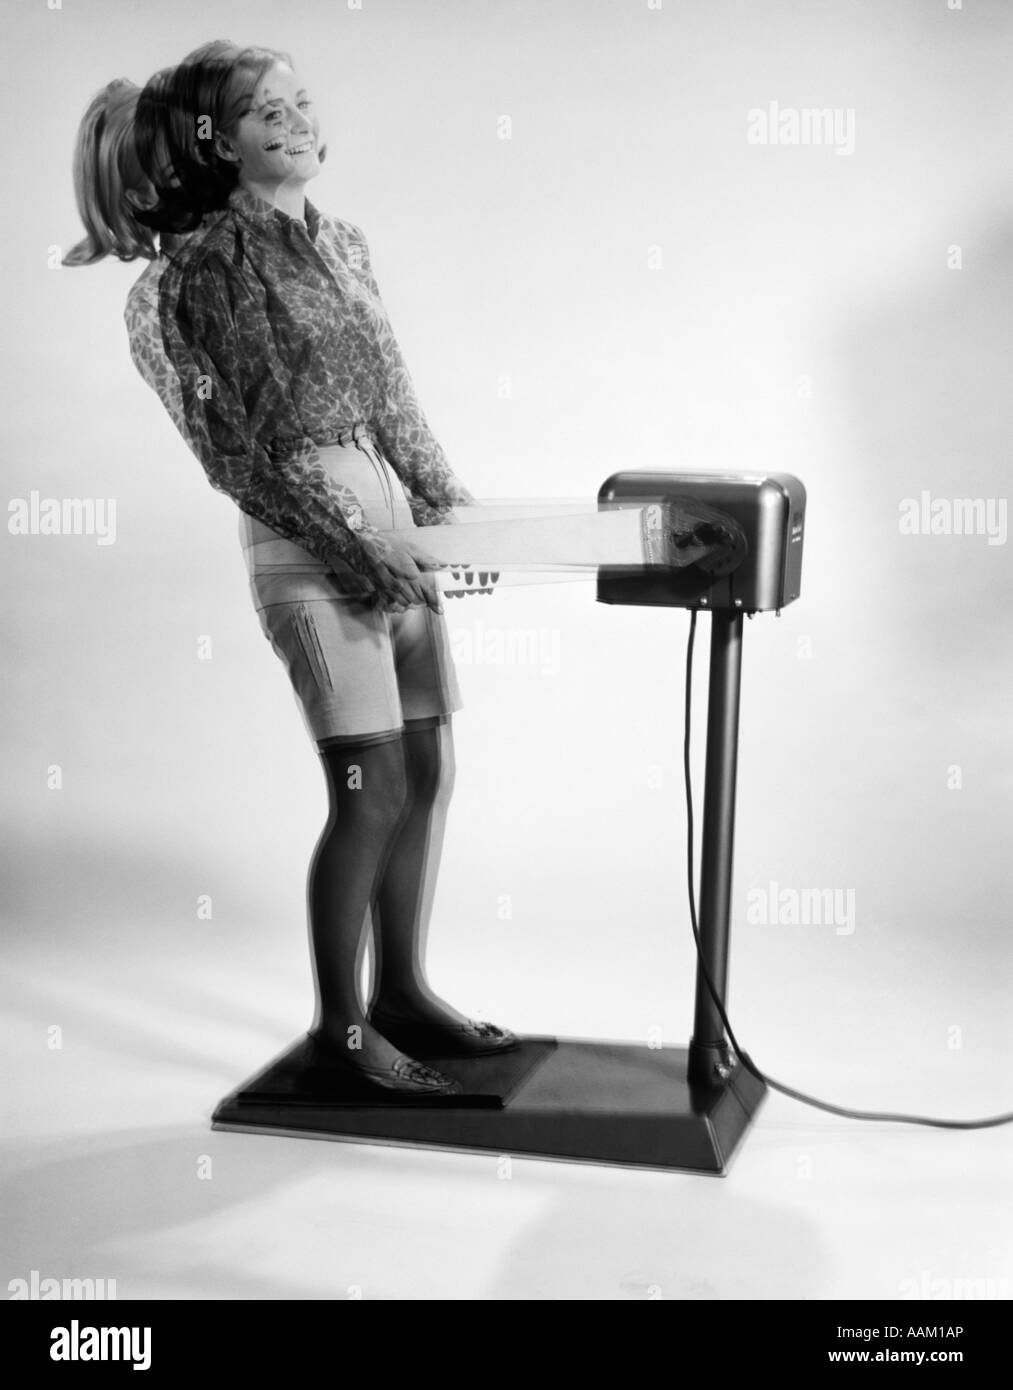 1960s WOMAN MASSAGED BY VIBRATING EXERCISE MACHINE Stock Photo